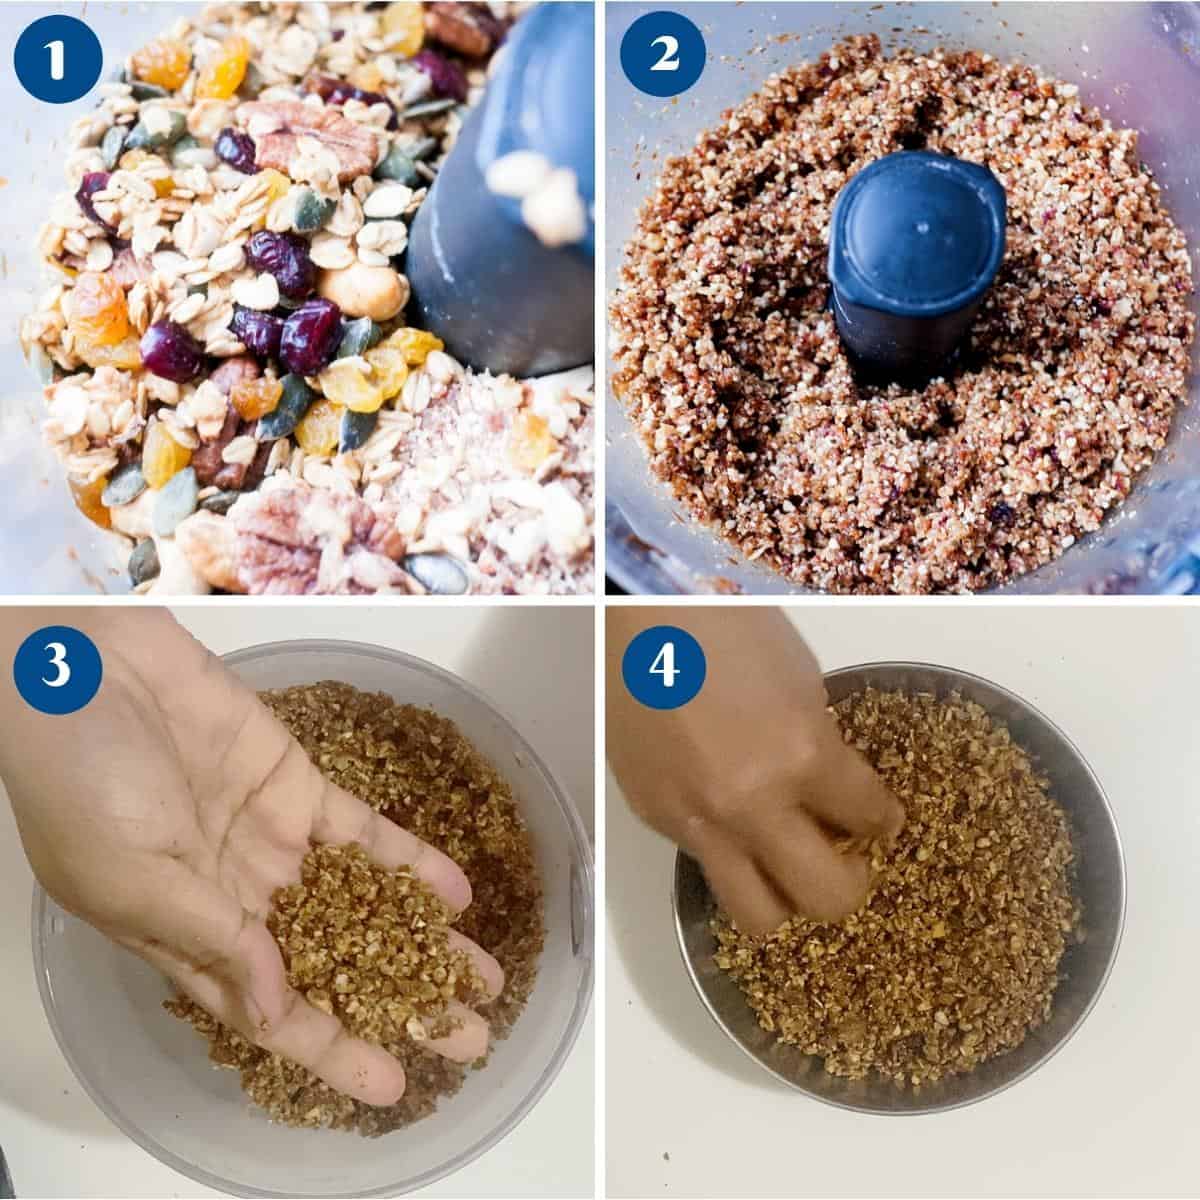 Progress pictures making granola crumbs for energy balls.